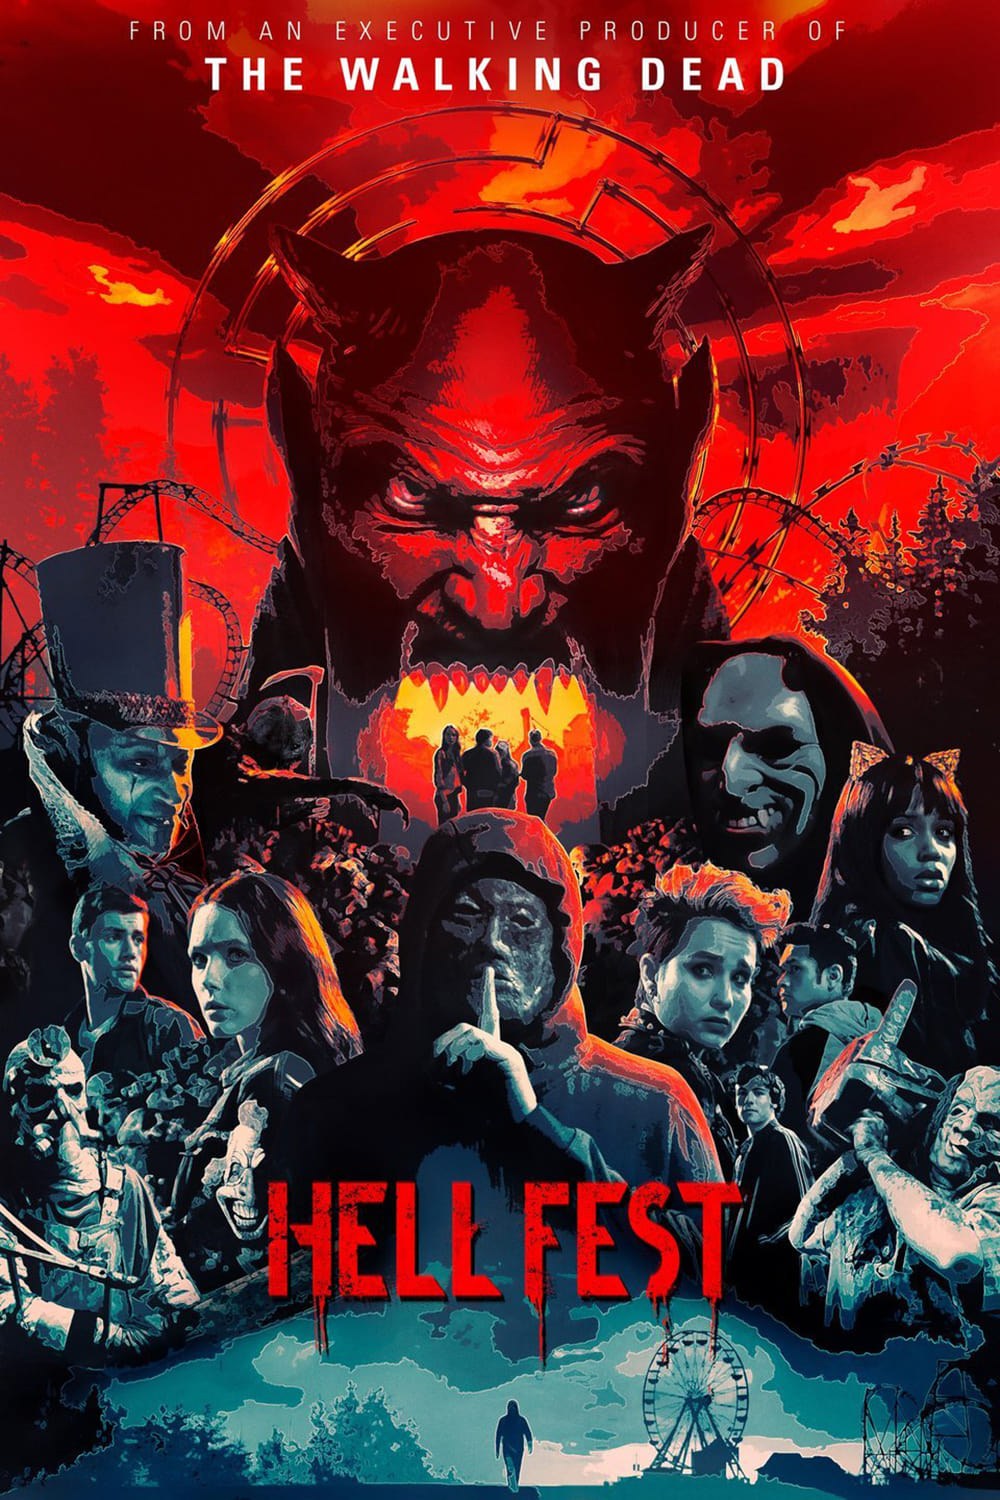 Hell Fest สวนสนุกนรก (2018)